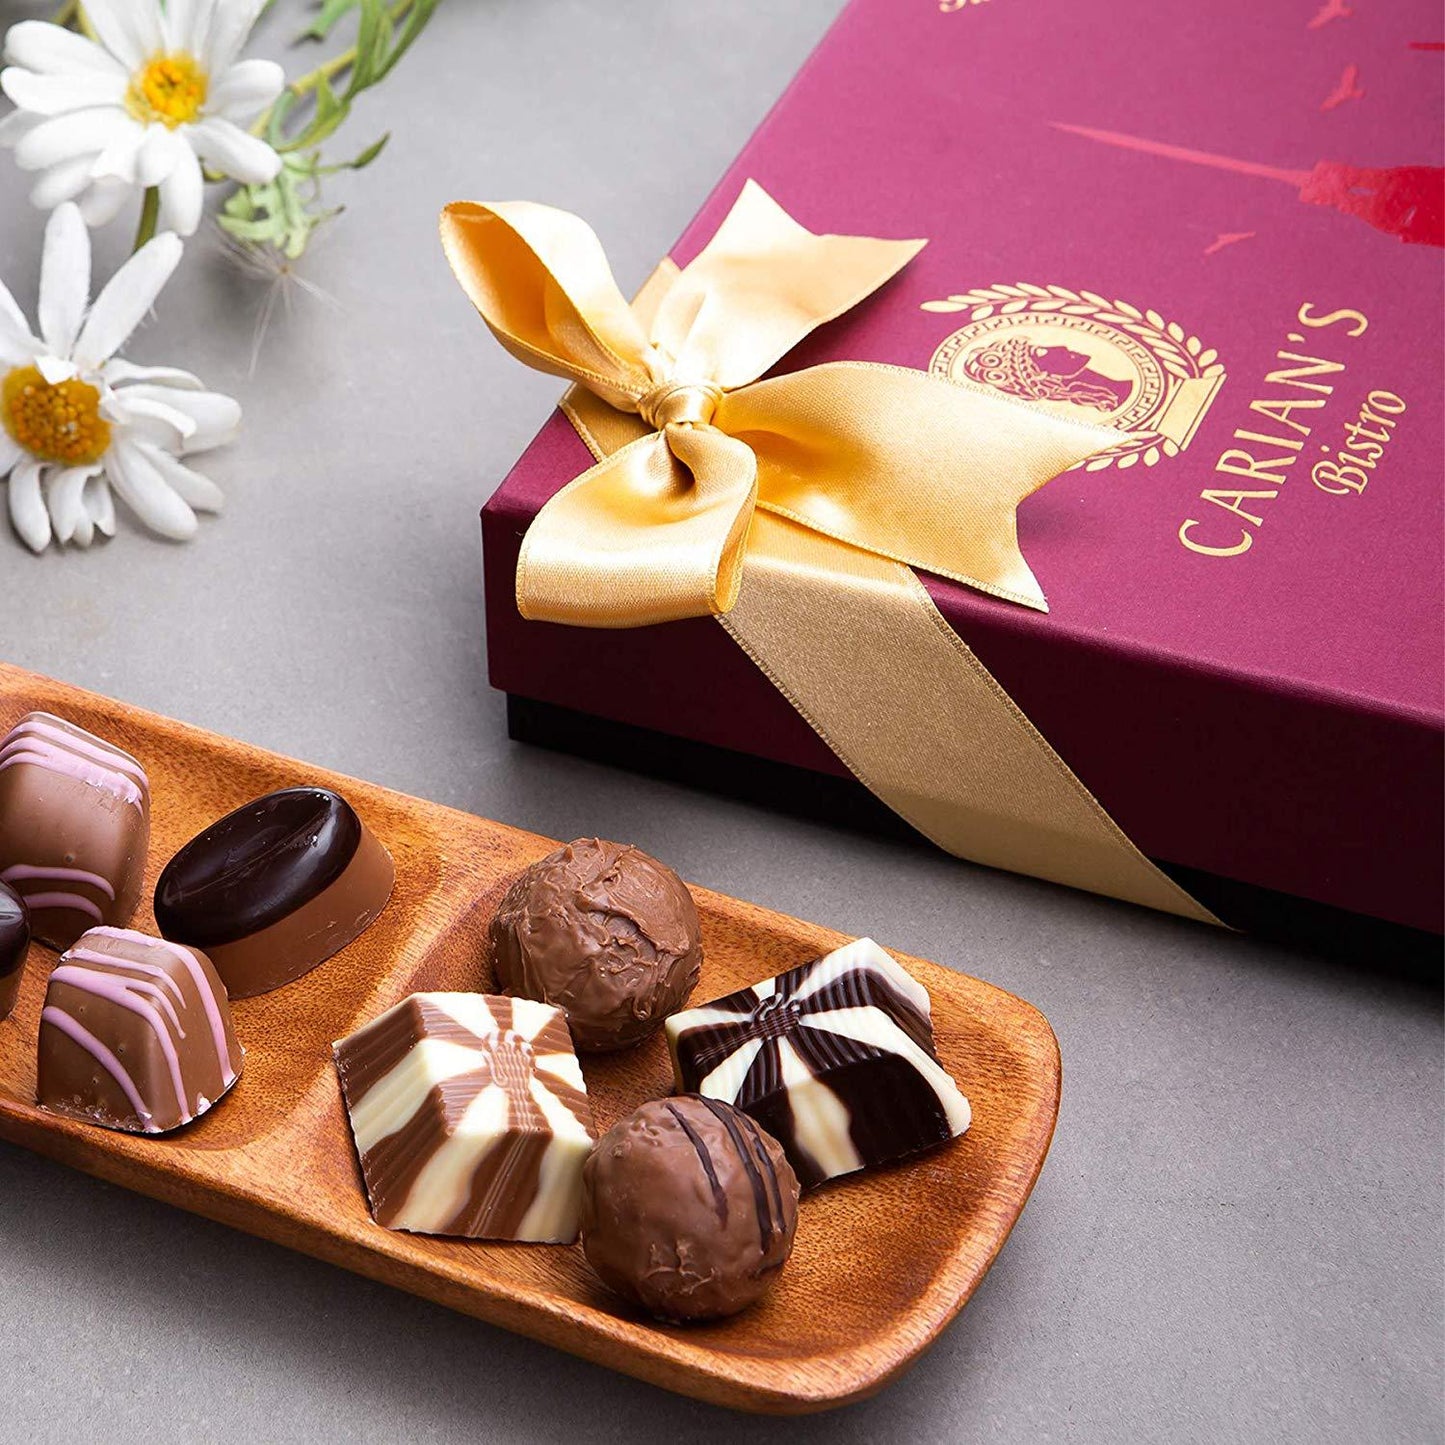 Bistro Chocolate Box Luxury Selection